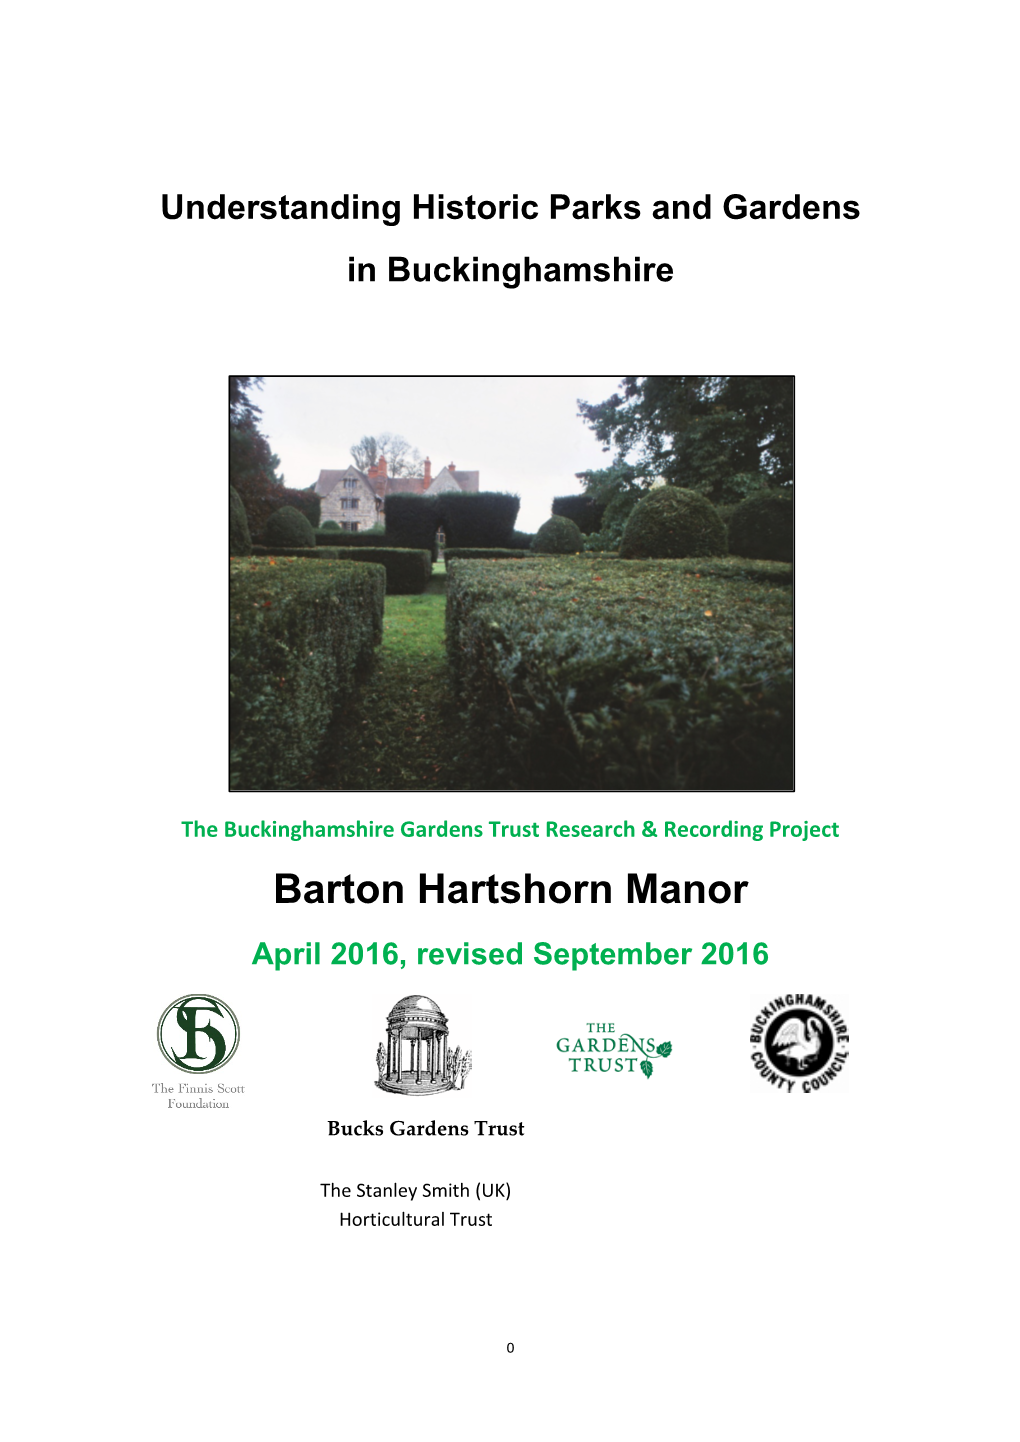 Barton Hartshorn Manor April 2016, Revised September 2016